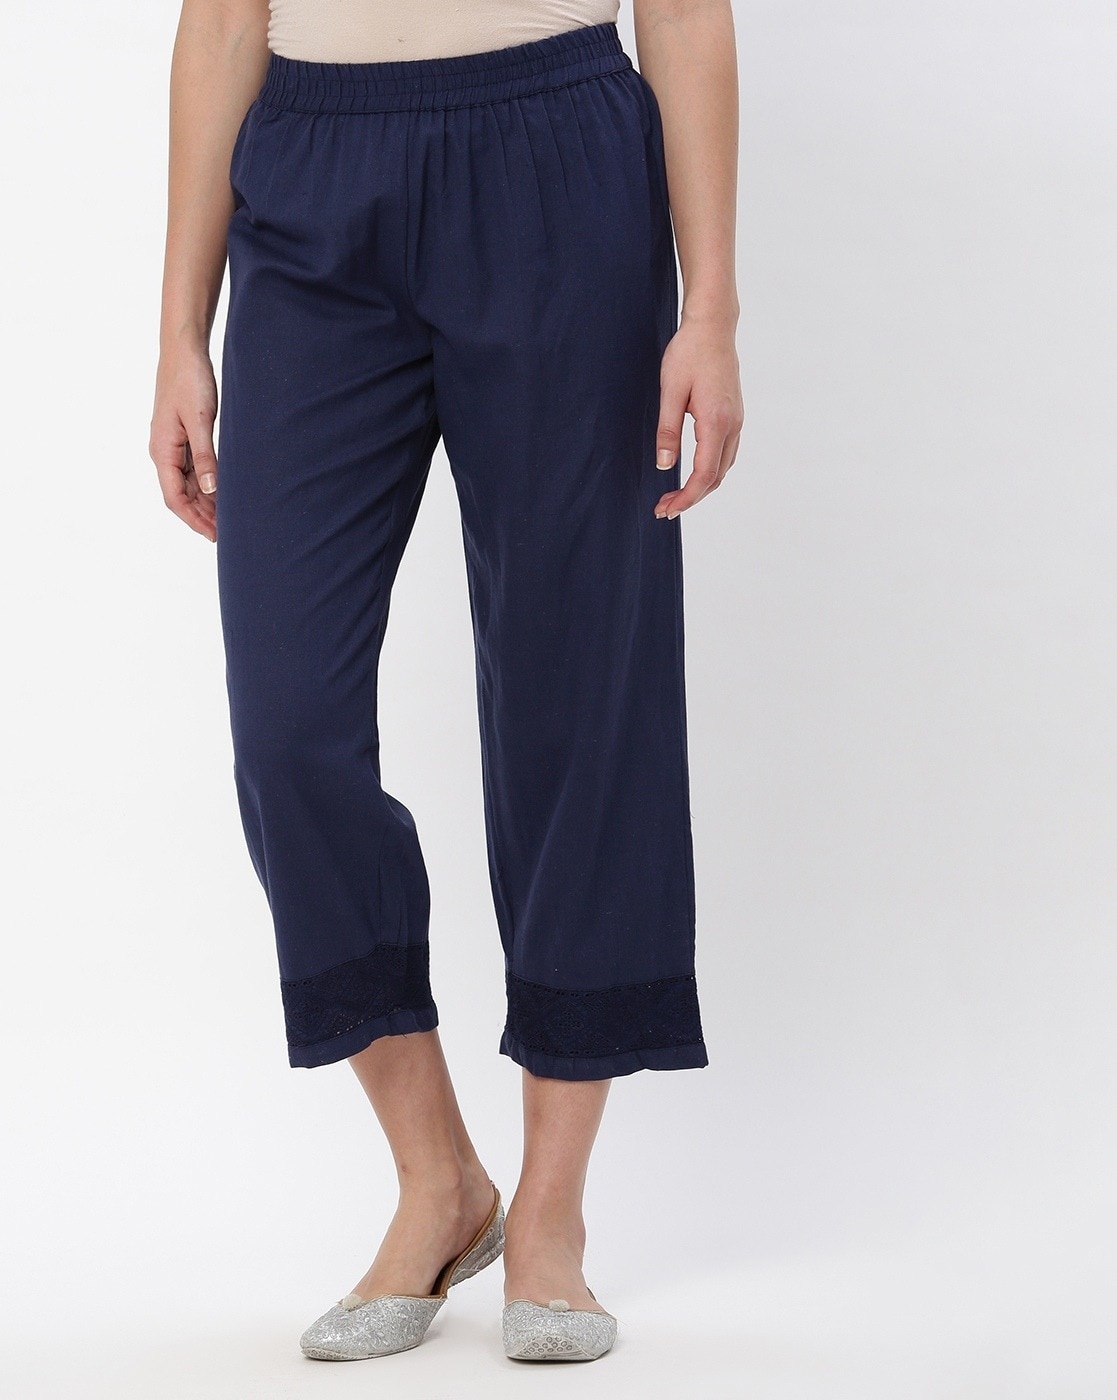 Buy Nirmal Women's Cotton Slub Stretchable Bundi/Cigarette/Potli Pant/Trouser  (Navy Blue, 2XL) at Amazon.in